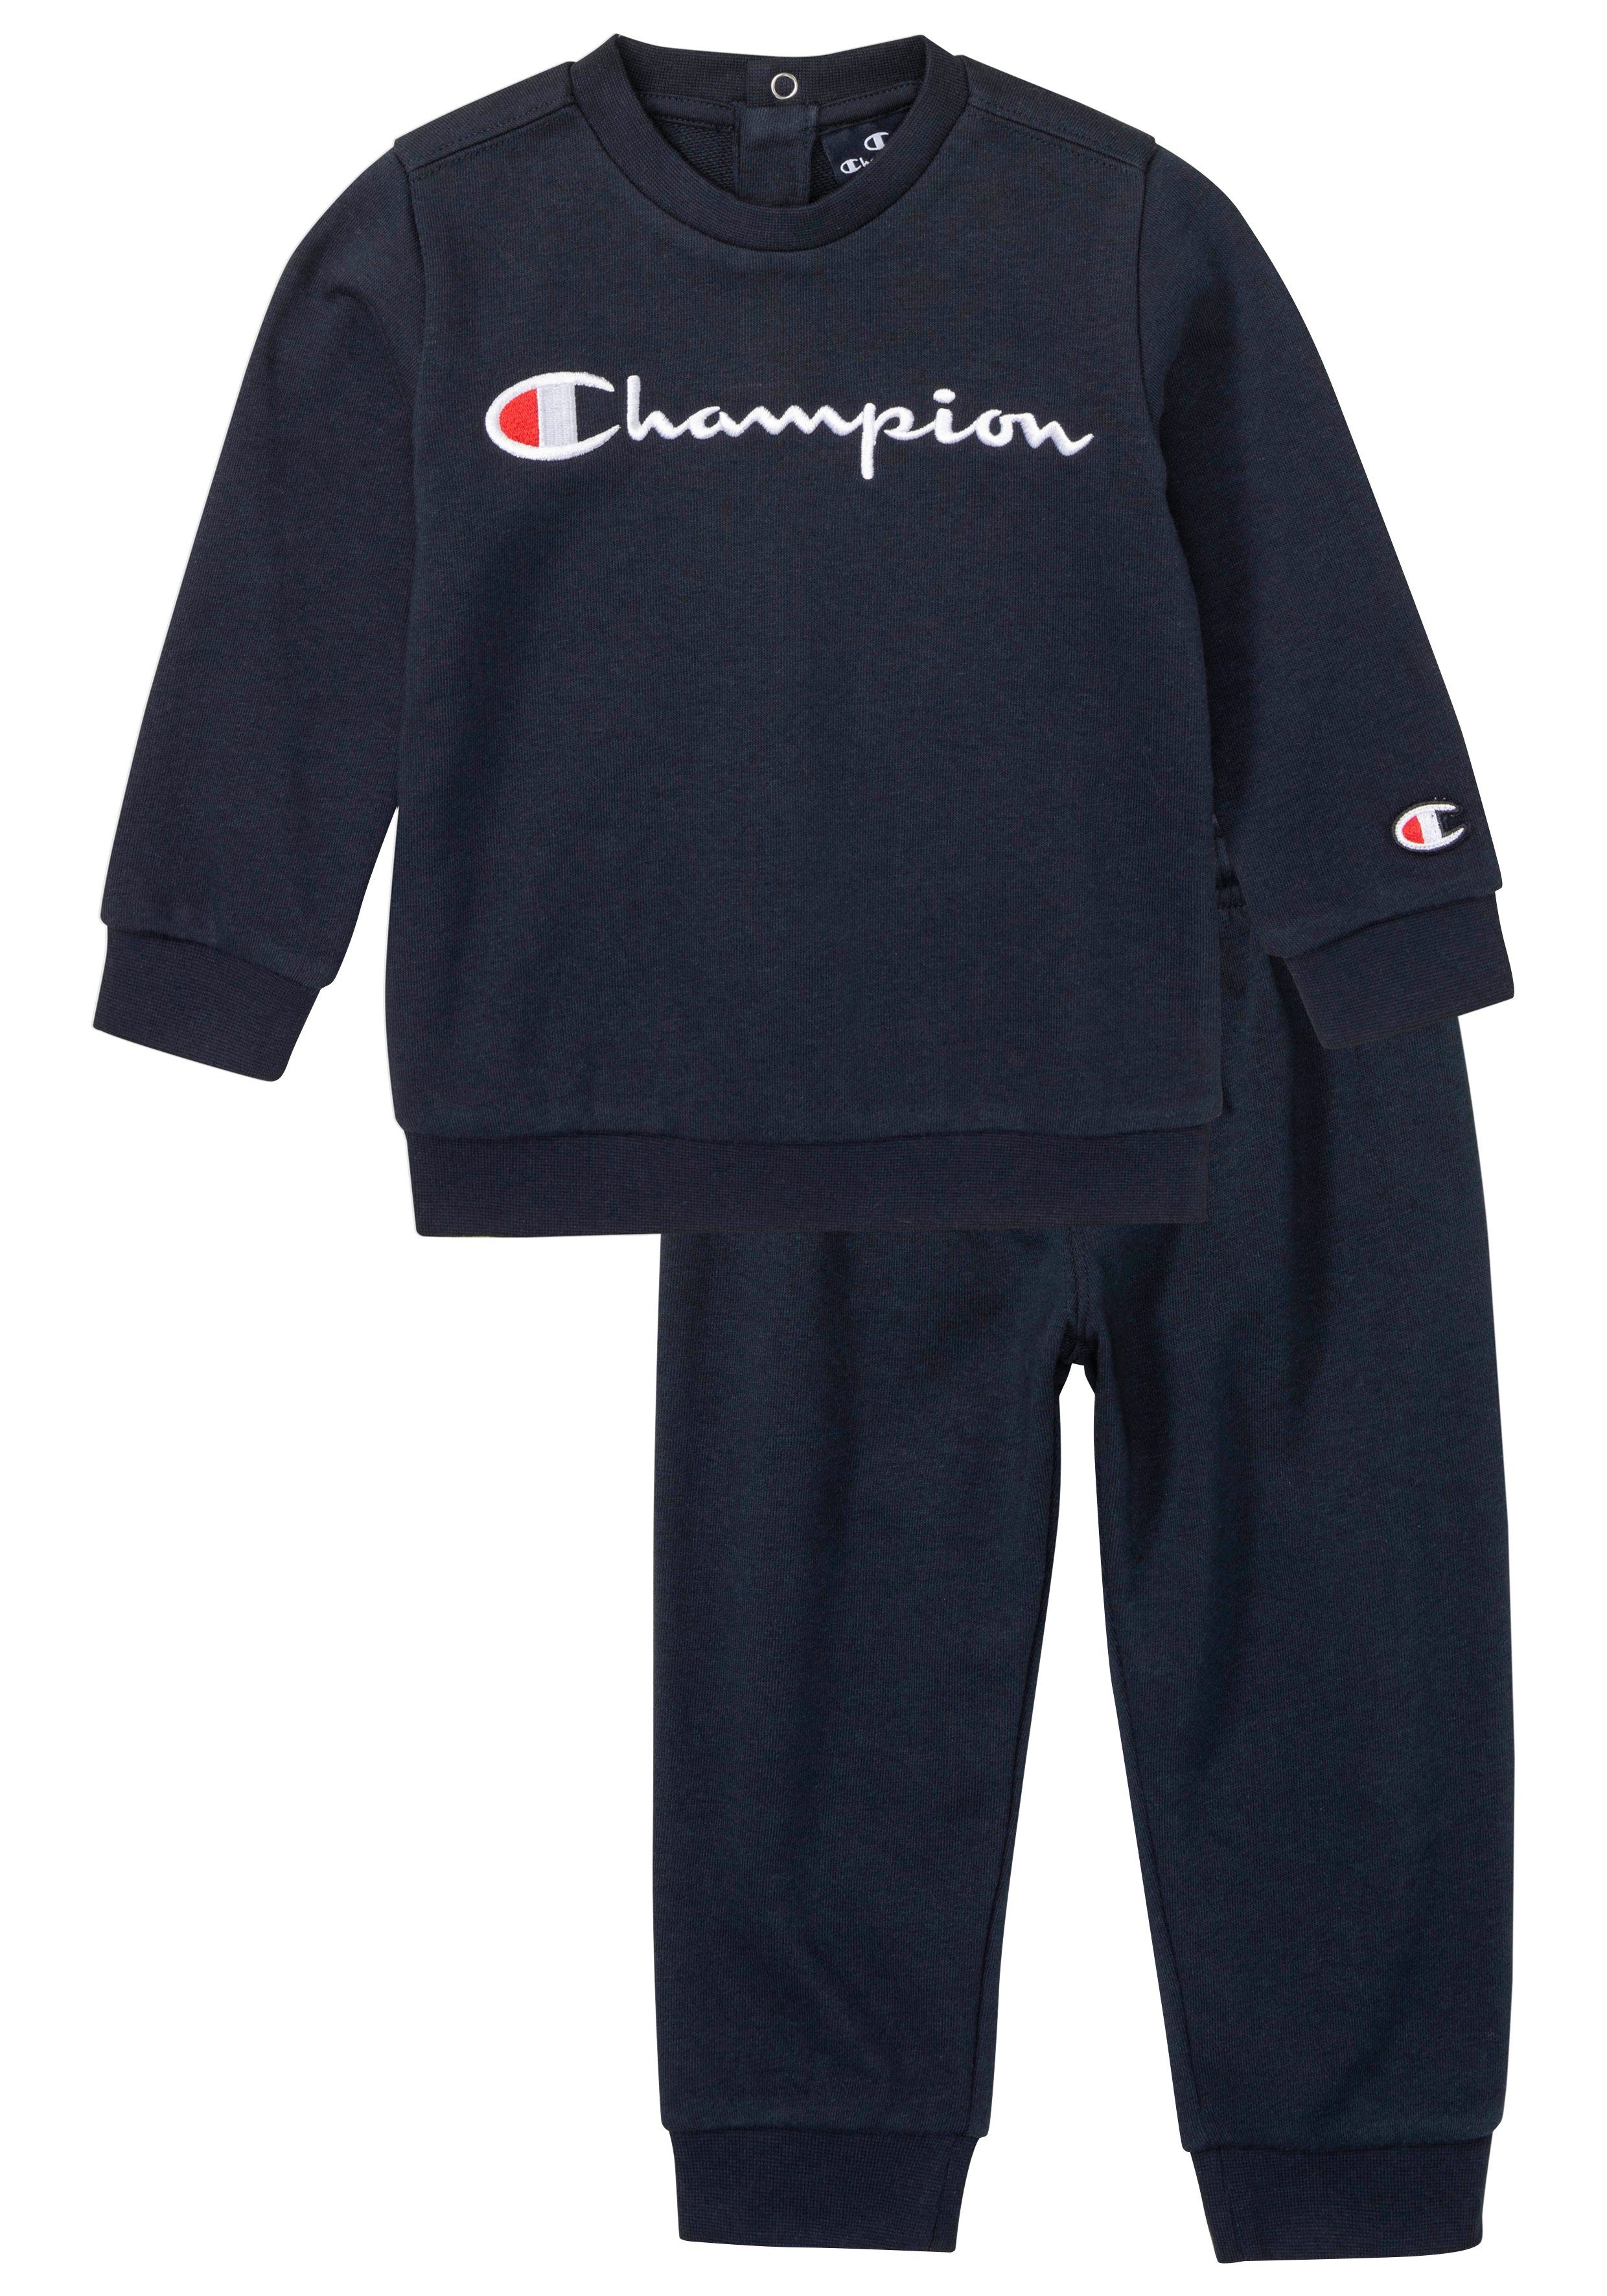 Icons Crewneck Trainingsanzug Suit Toddler Champion